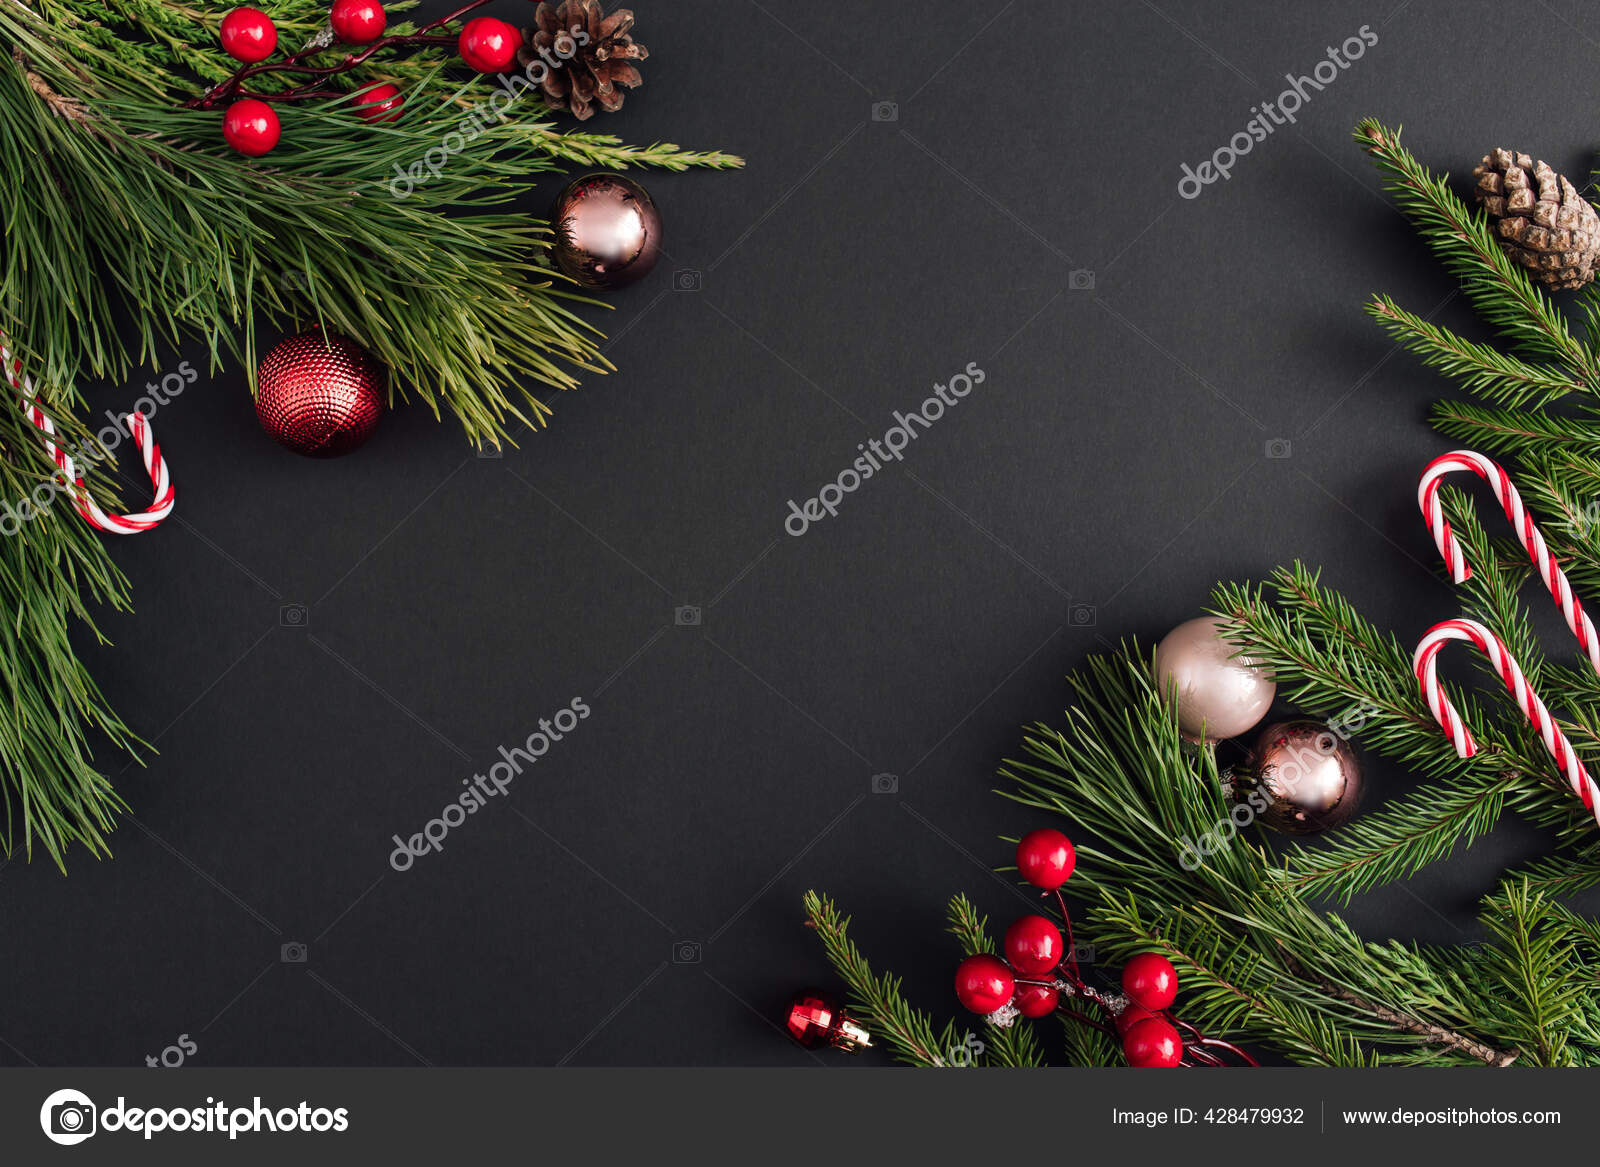 Christmas Decoration Xmas Tree Branches Black Background New Year Greeting  Stock Photo by ©tanjaivanova 428479932